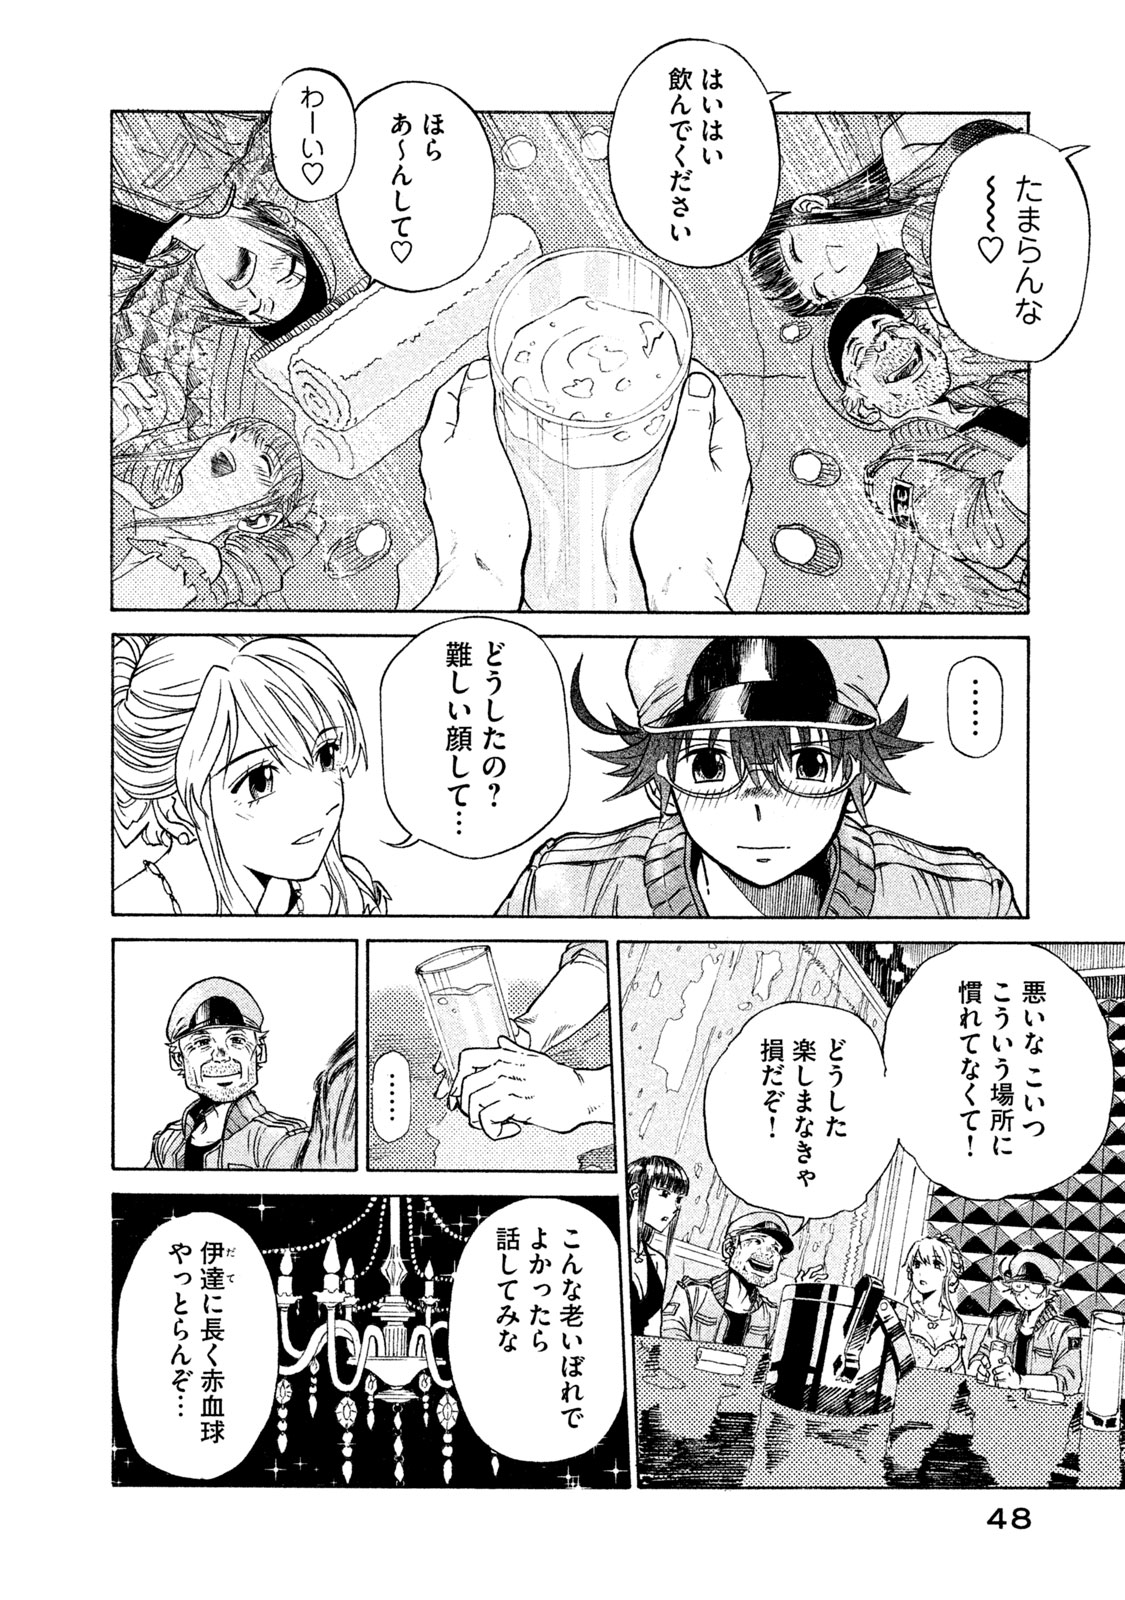 Hataraku Saibou BLACK - Chapter 2 - Page 12